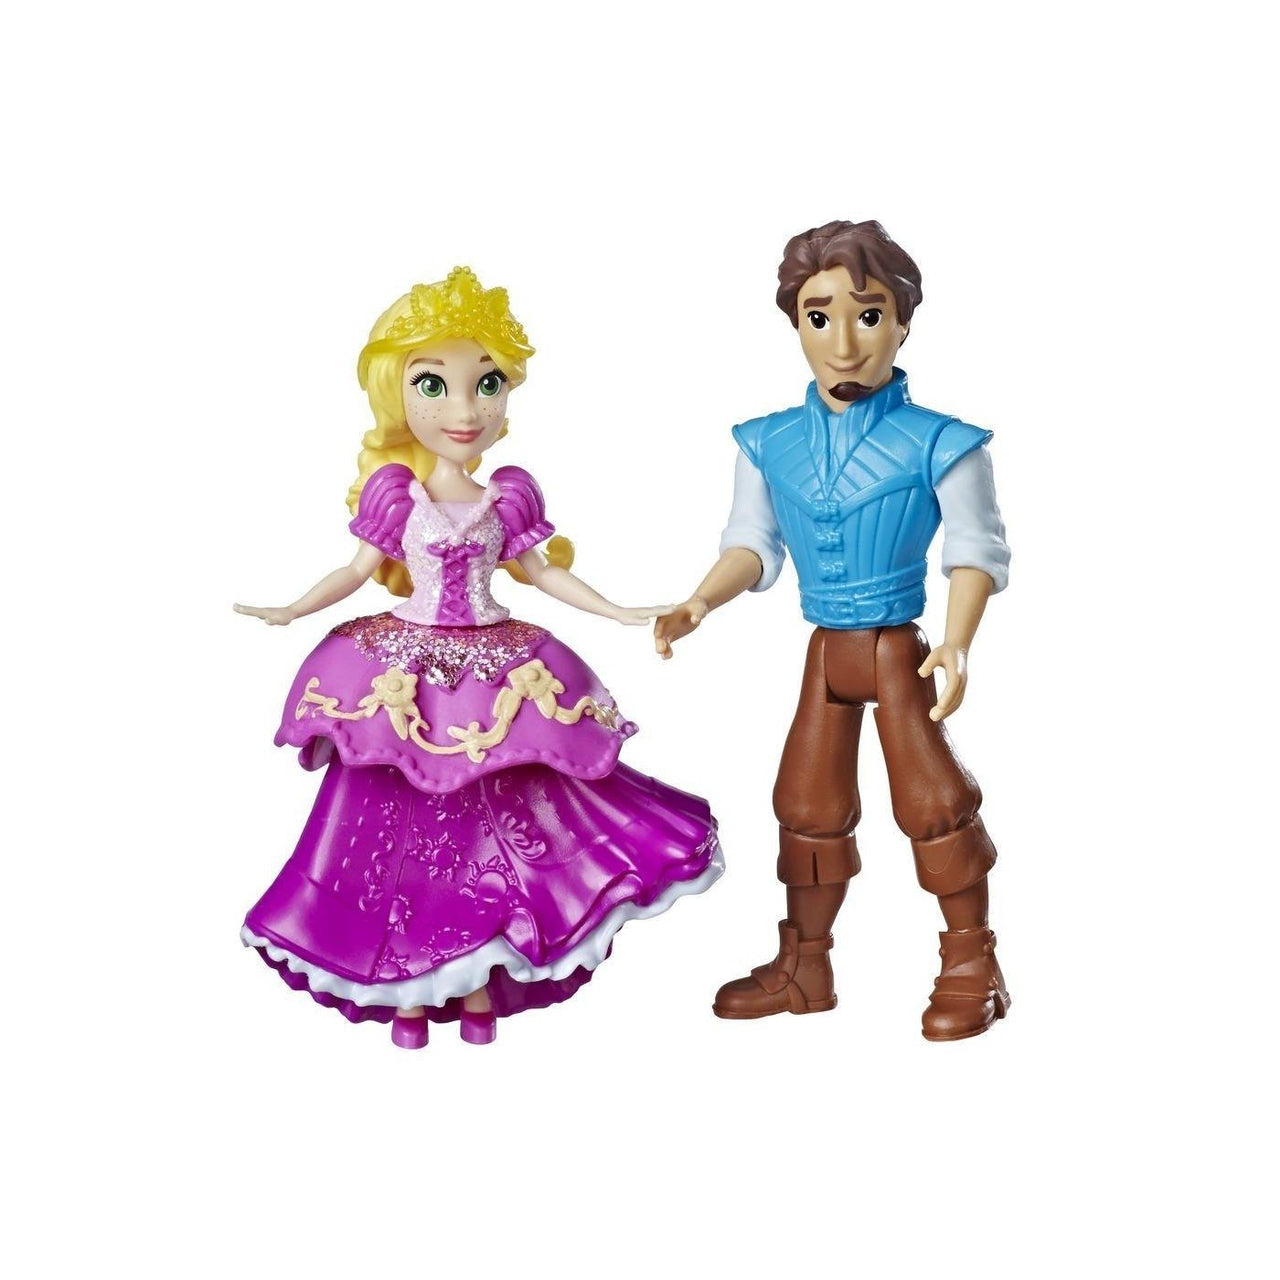 Hasbro-Disney Princess Small Doll Princess and Prince Assortment